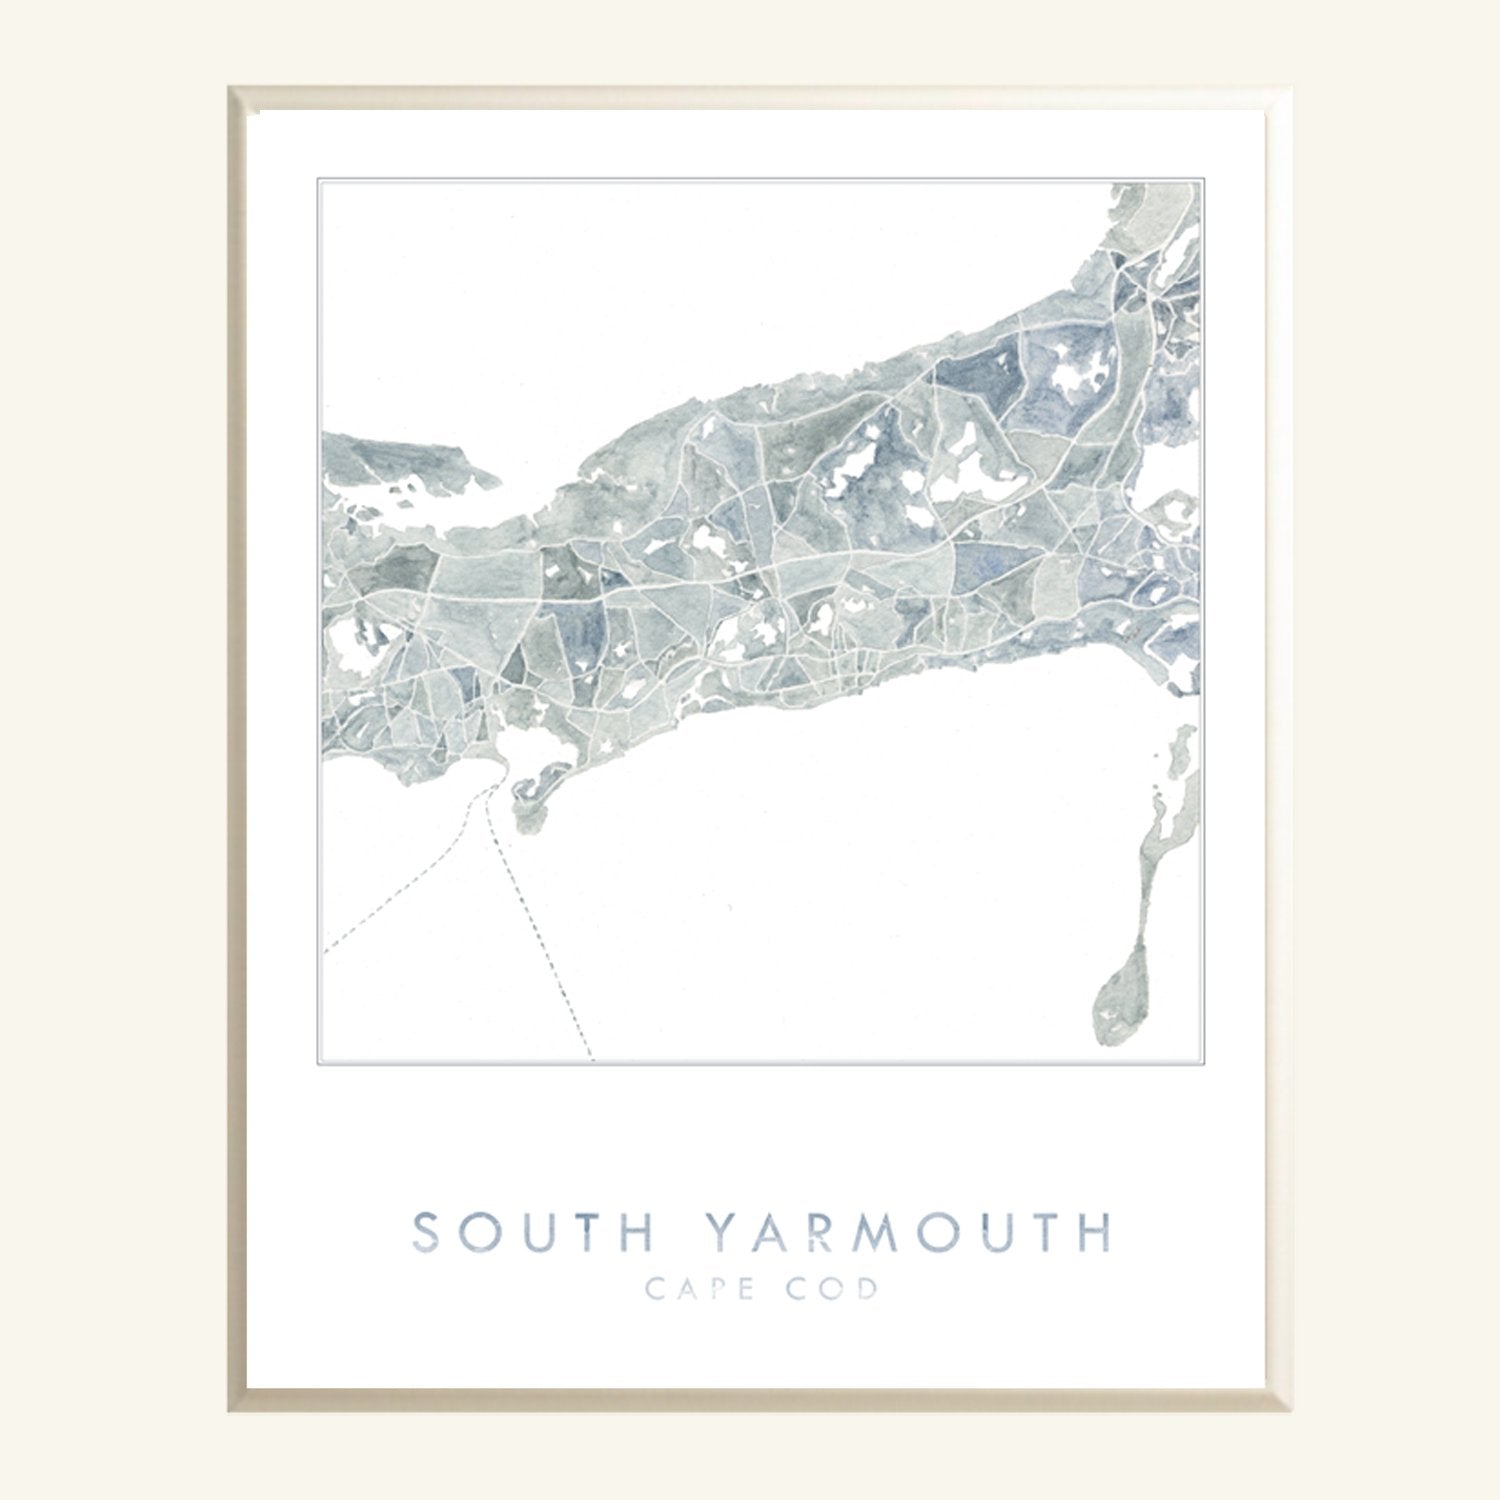 CAPE COD Hyannis Yarmouth Dennis Watercolor City Blocks Map: PRINT